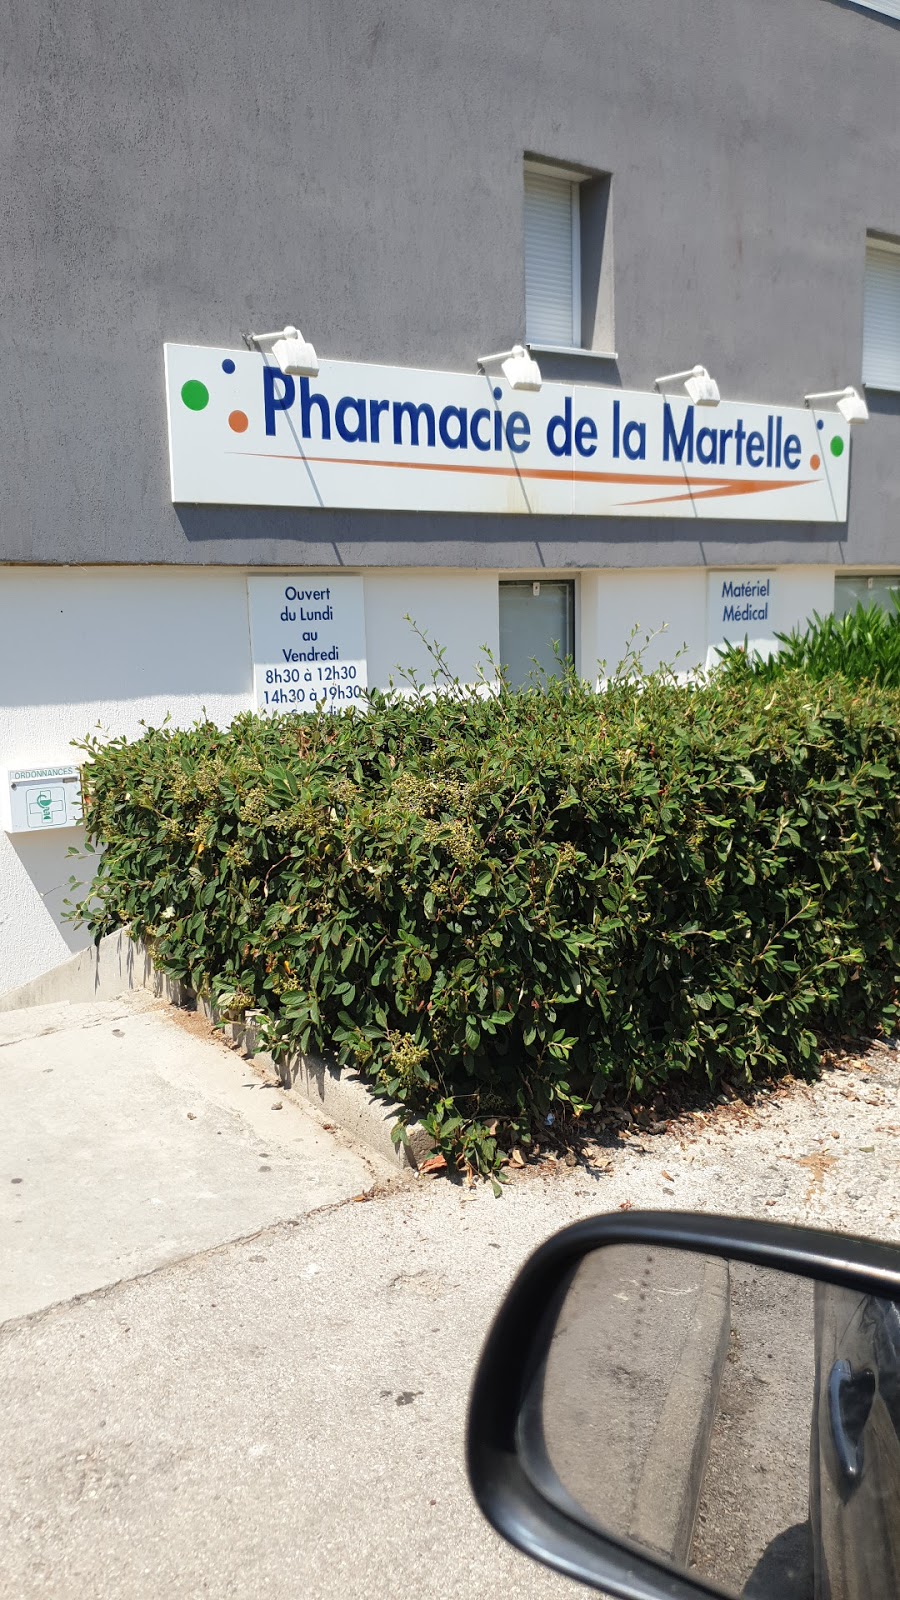 Pharmacie de la Martelle